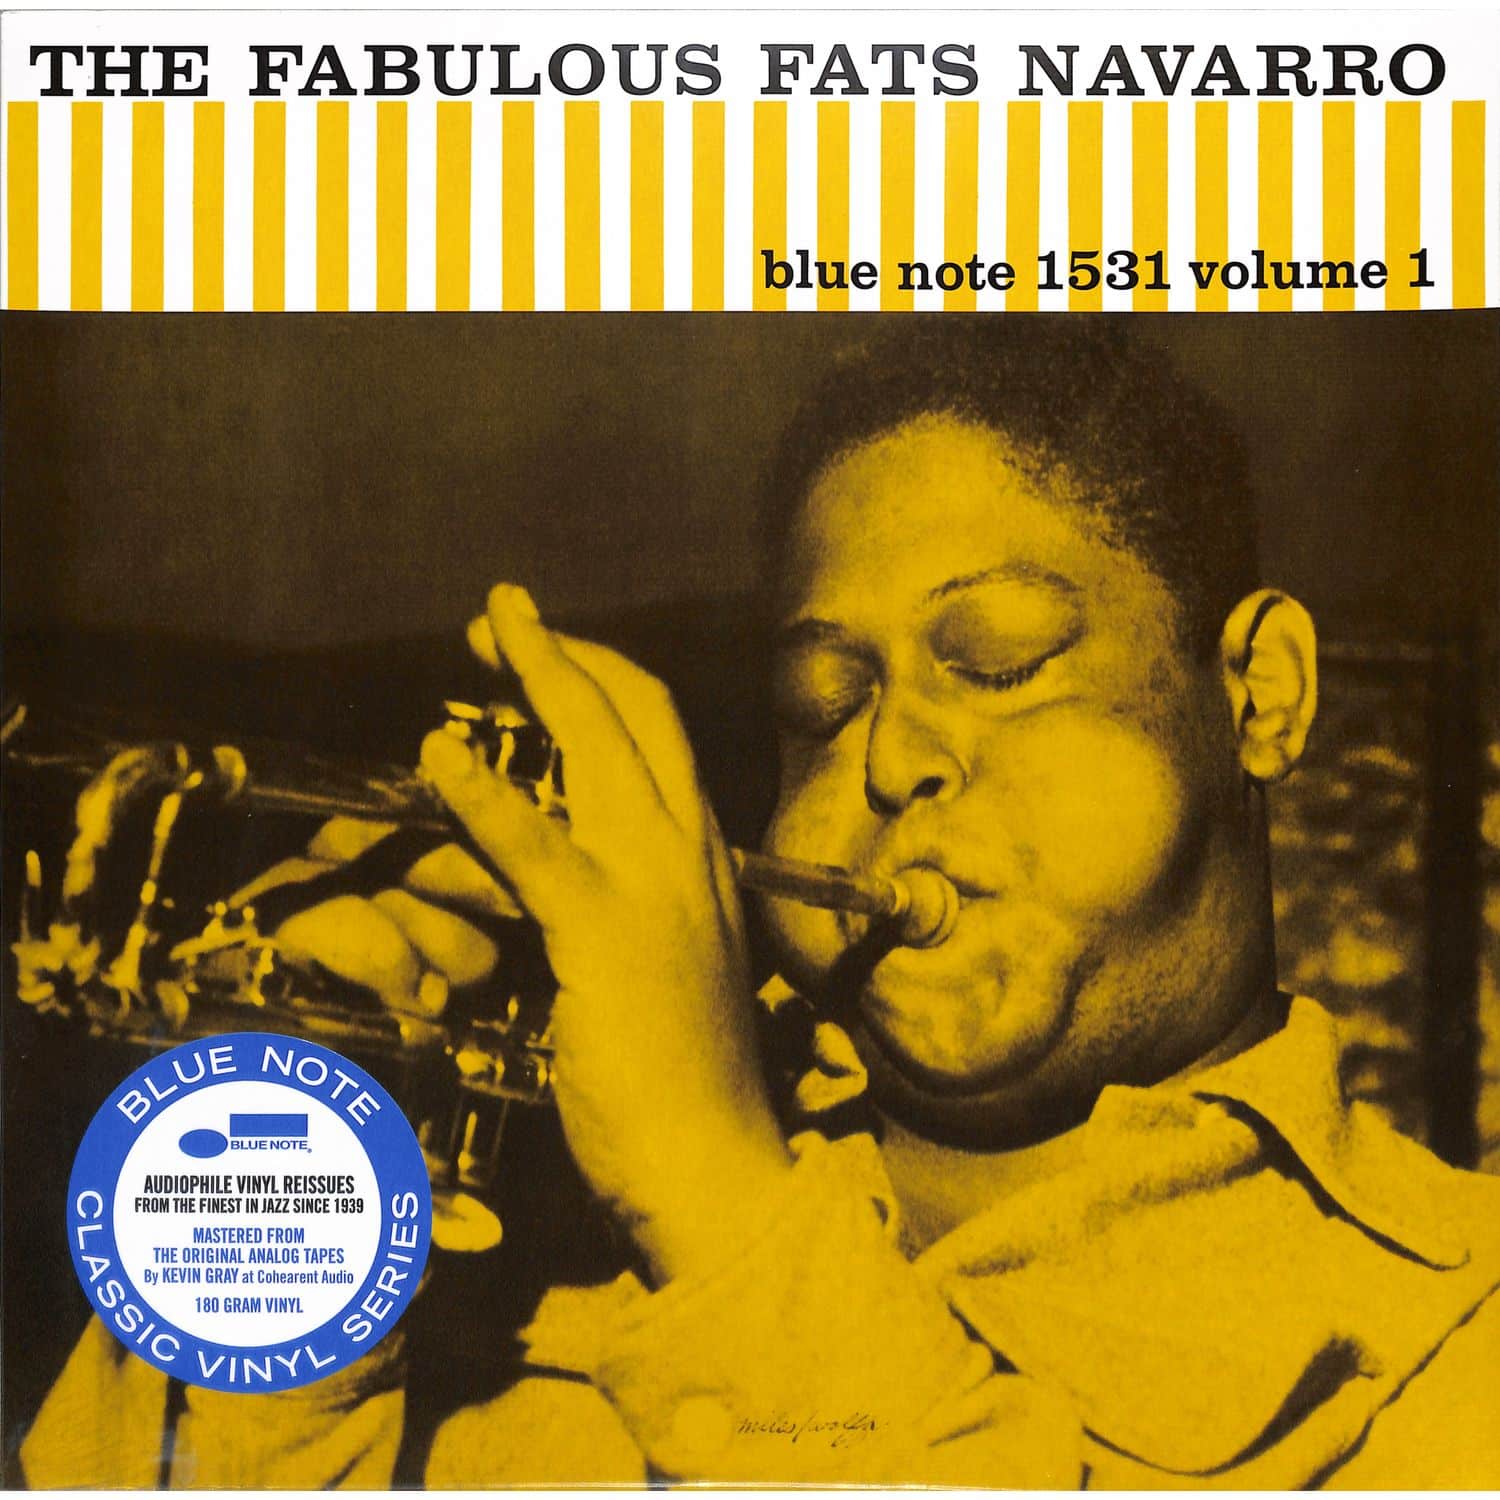 Fats Navarro - THE FABULOUS FATS NAVARRO, VOL.1 